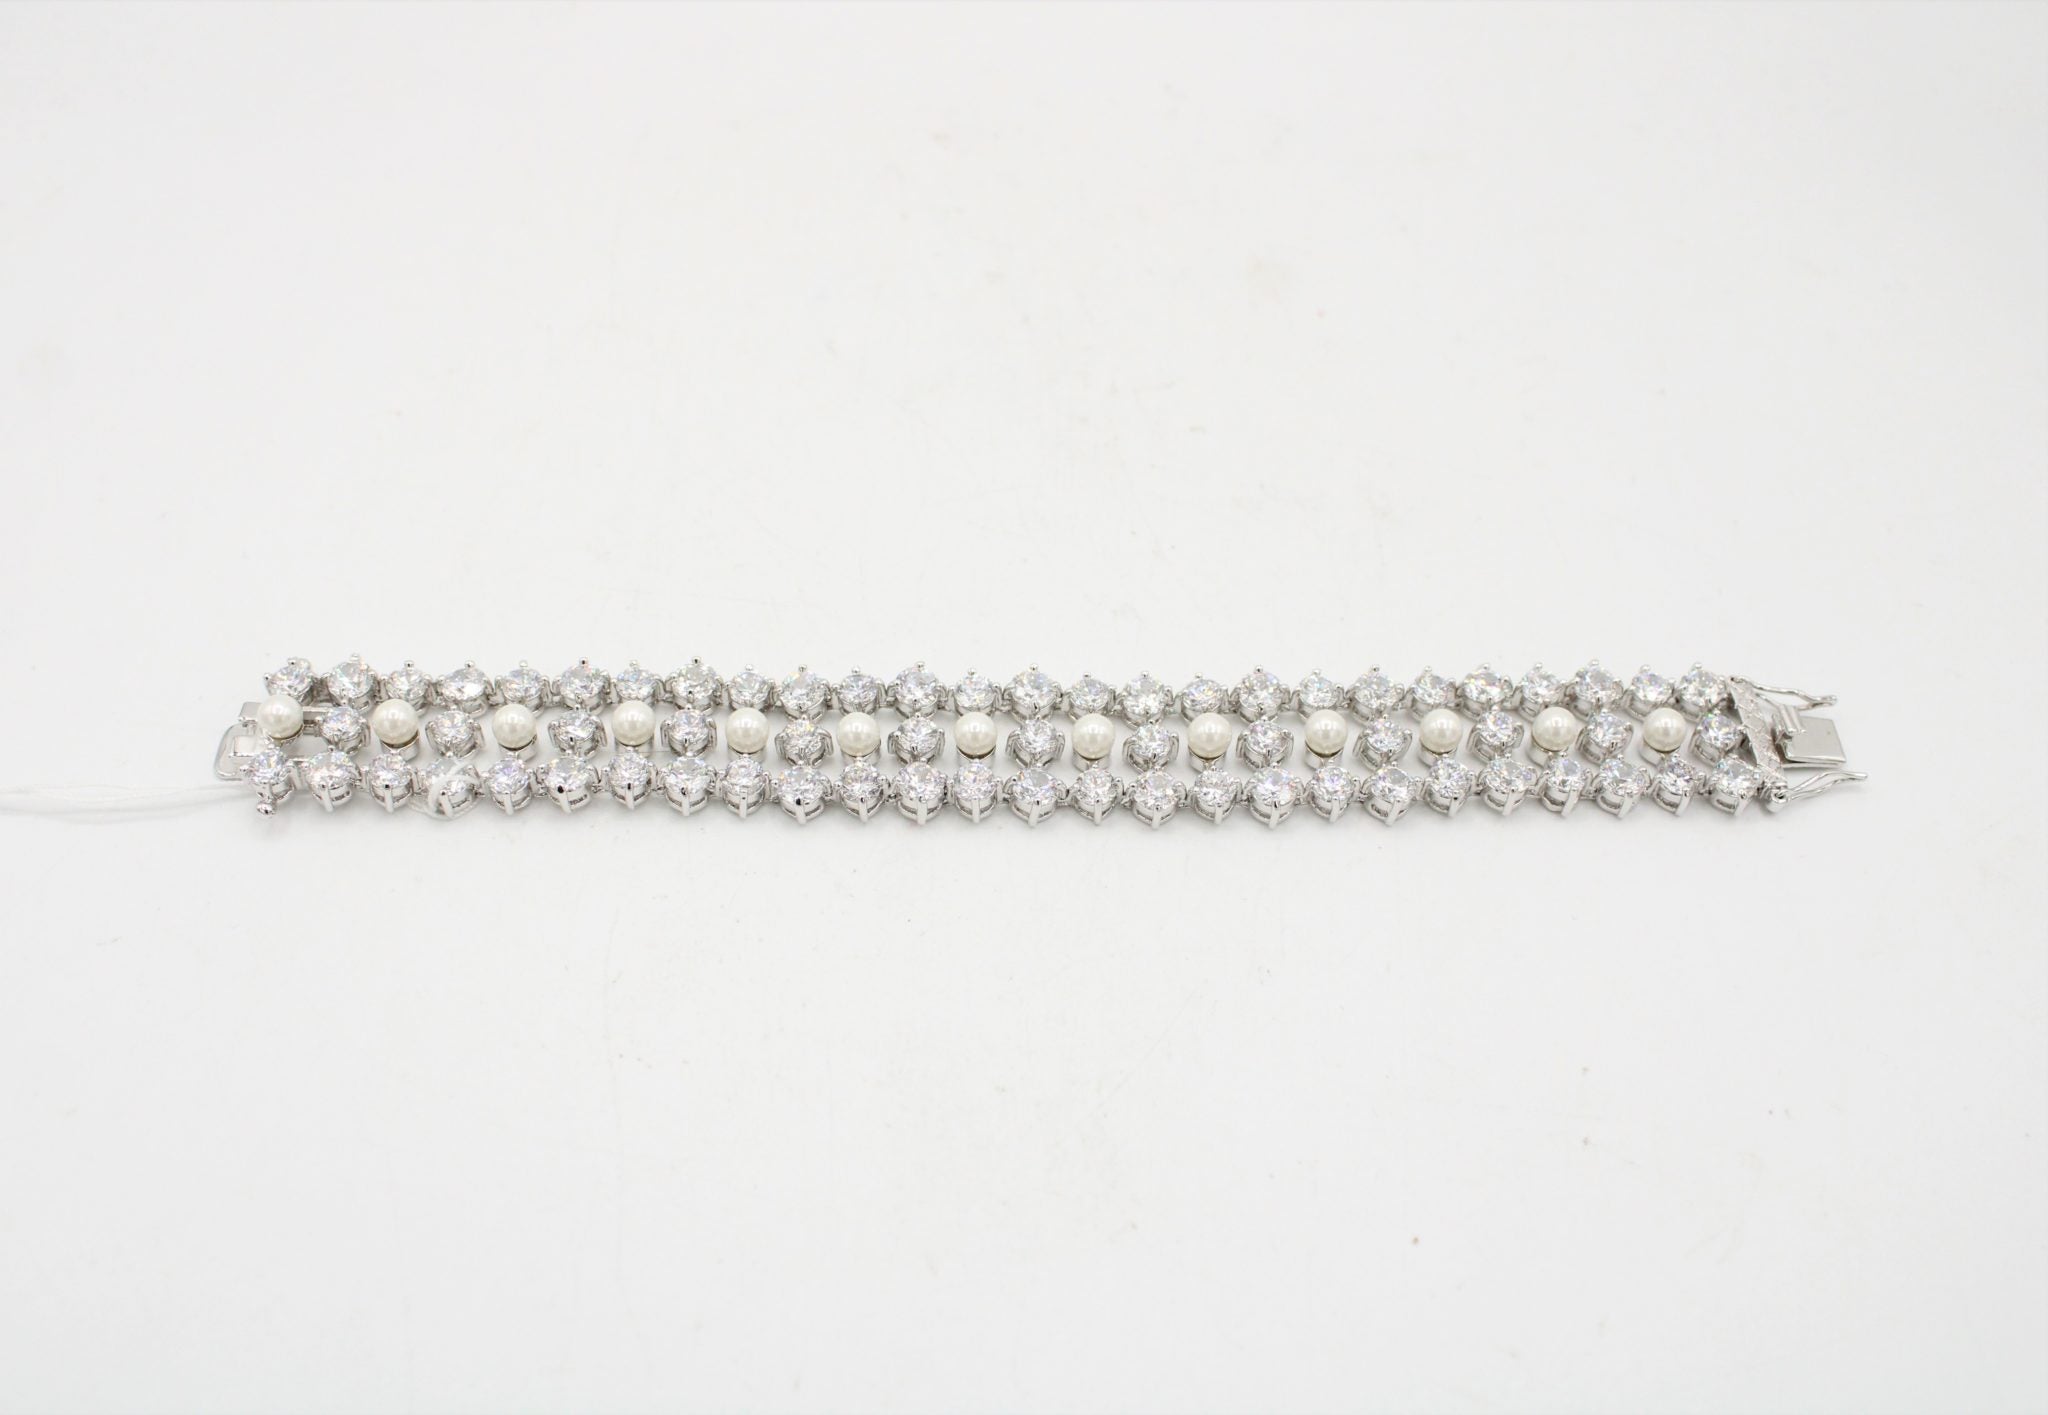 Beautiful Rhinestone & Faux Pearl Costume Jewelry Bracelet